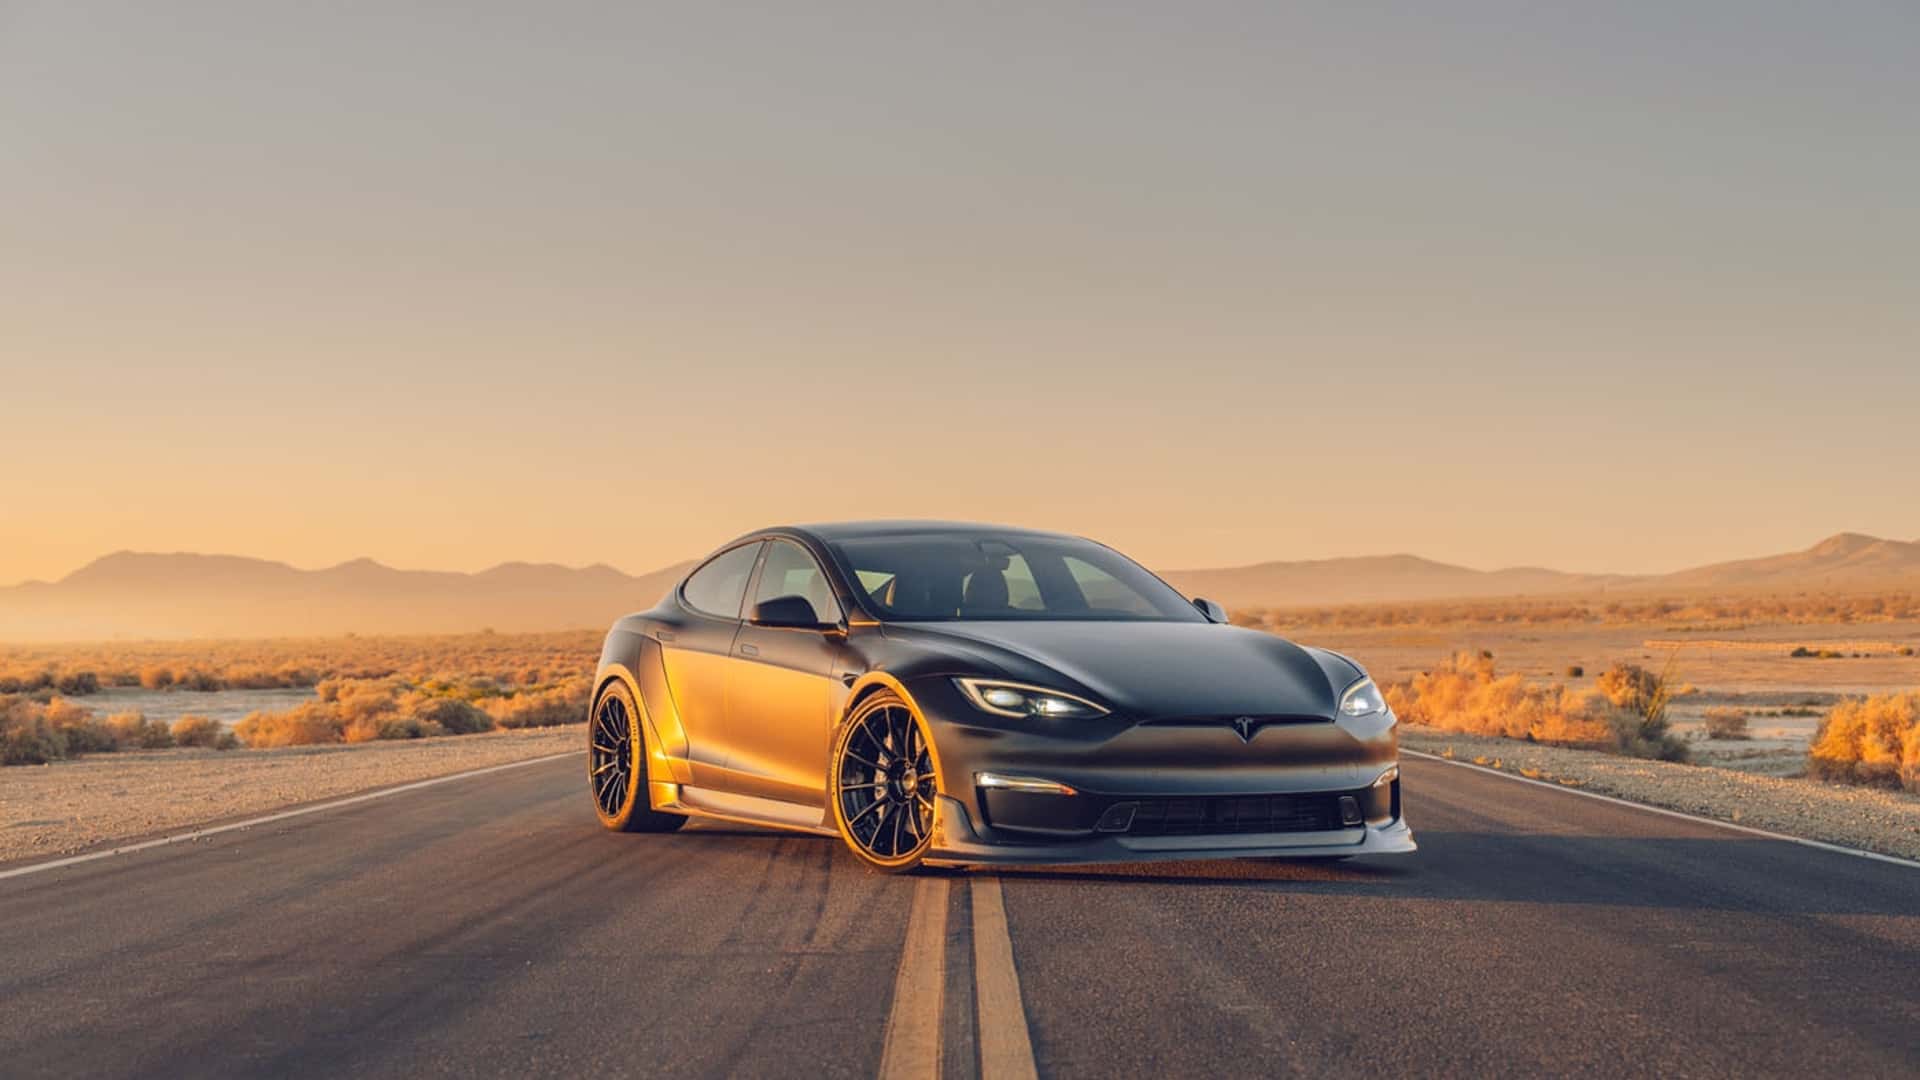 Unplugged Performance Reveals Upgraded Tesla Model S "Dark Knight"